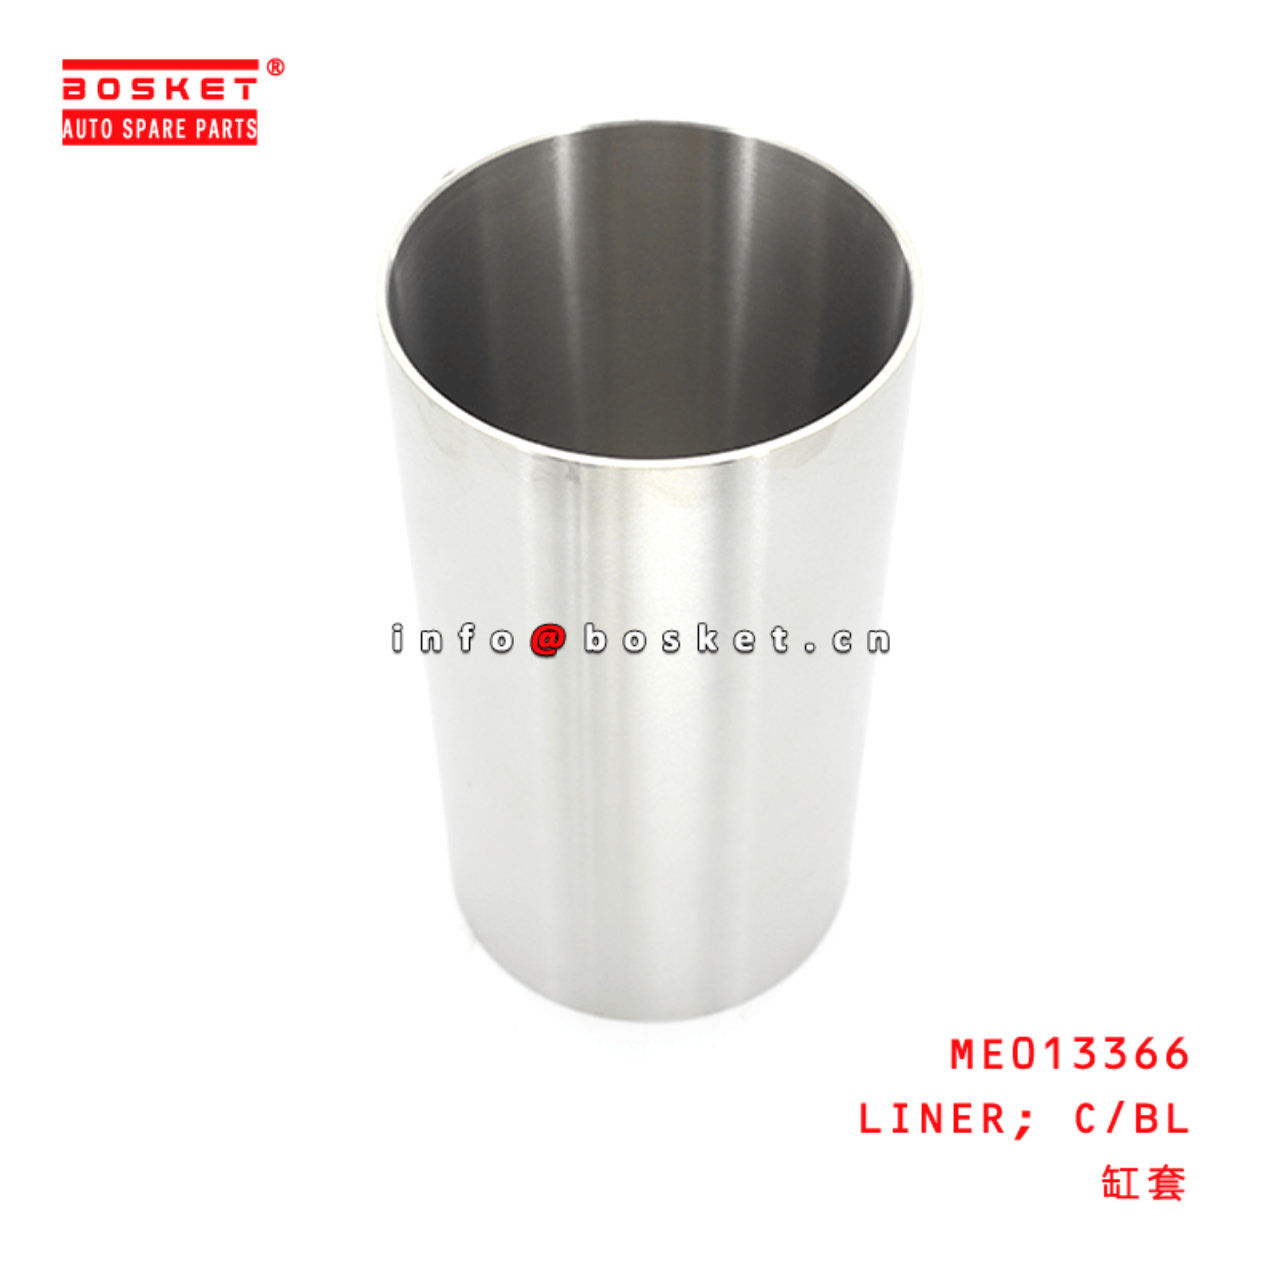 ME013366 Cylinder Block Liner Suitable for ISUZU 4D34 4D32